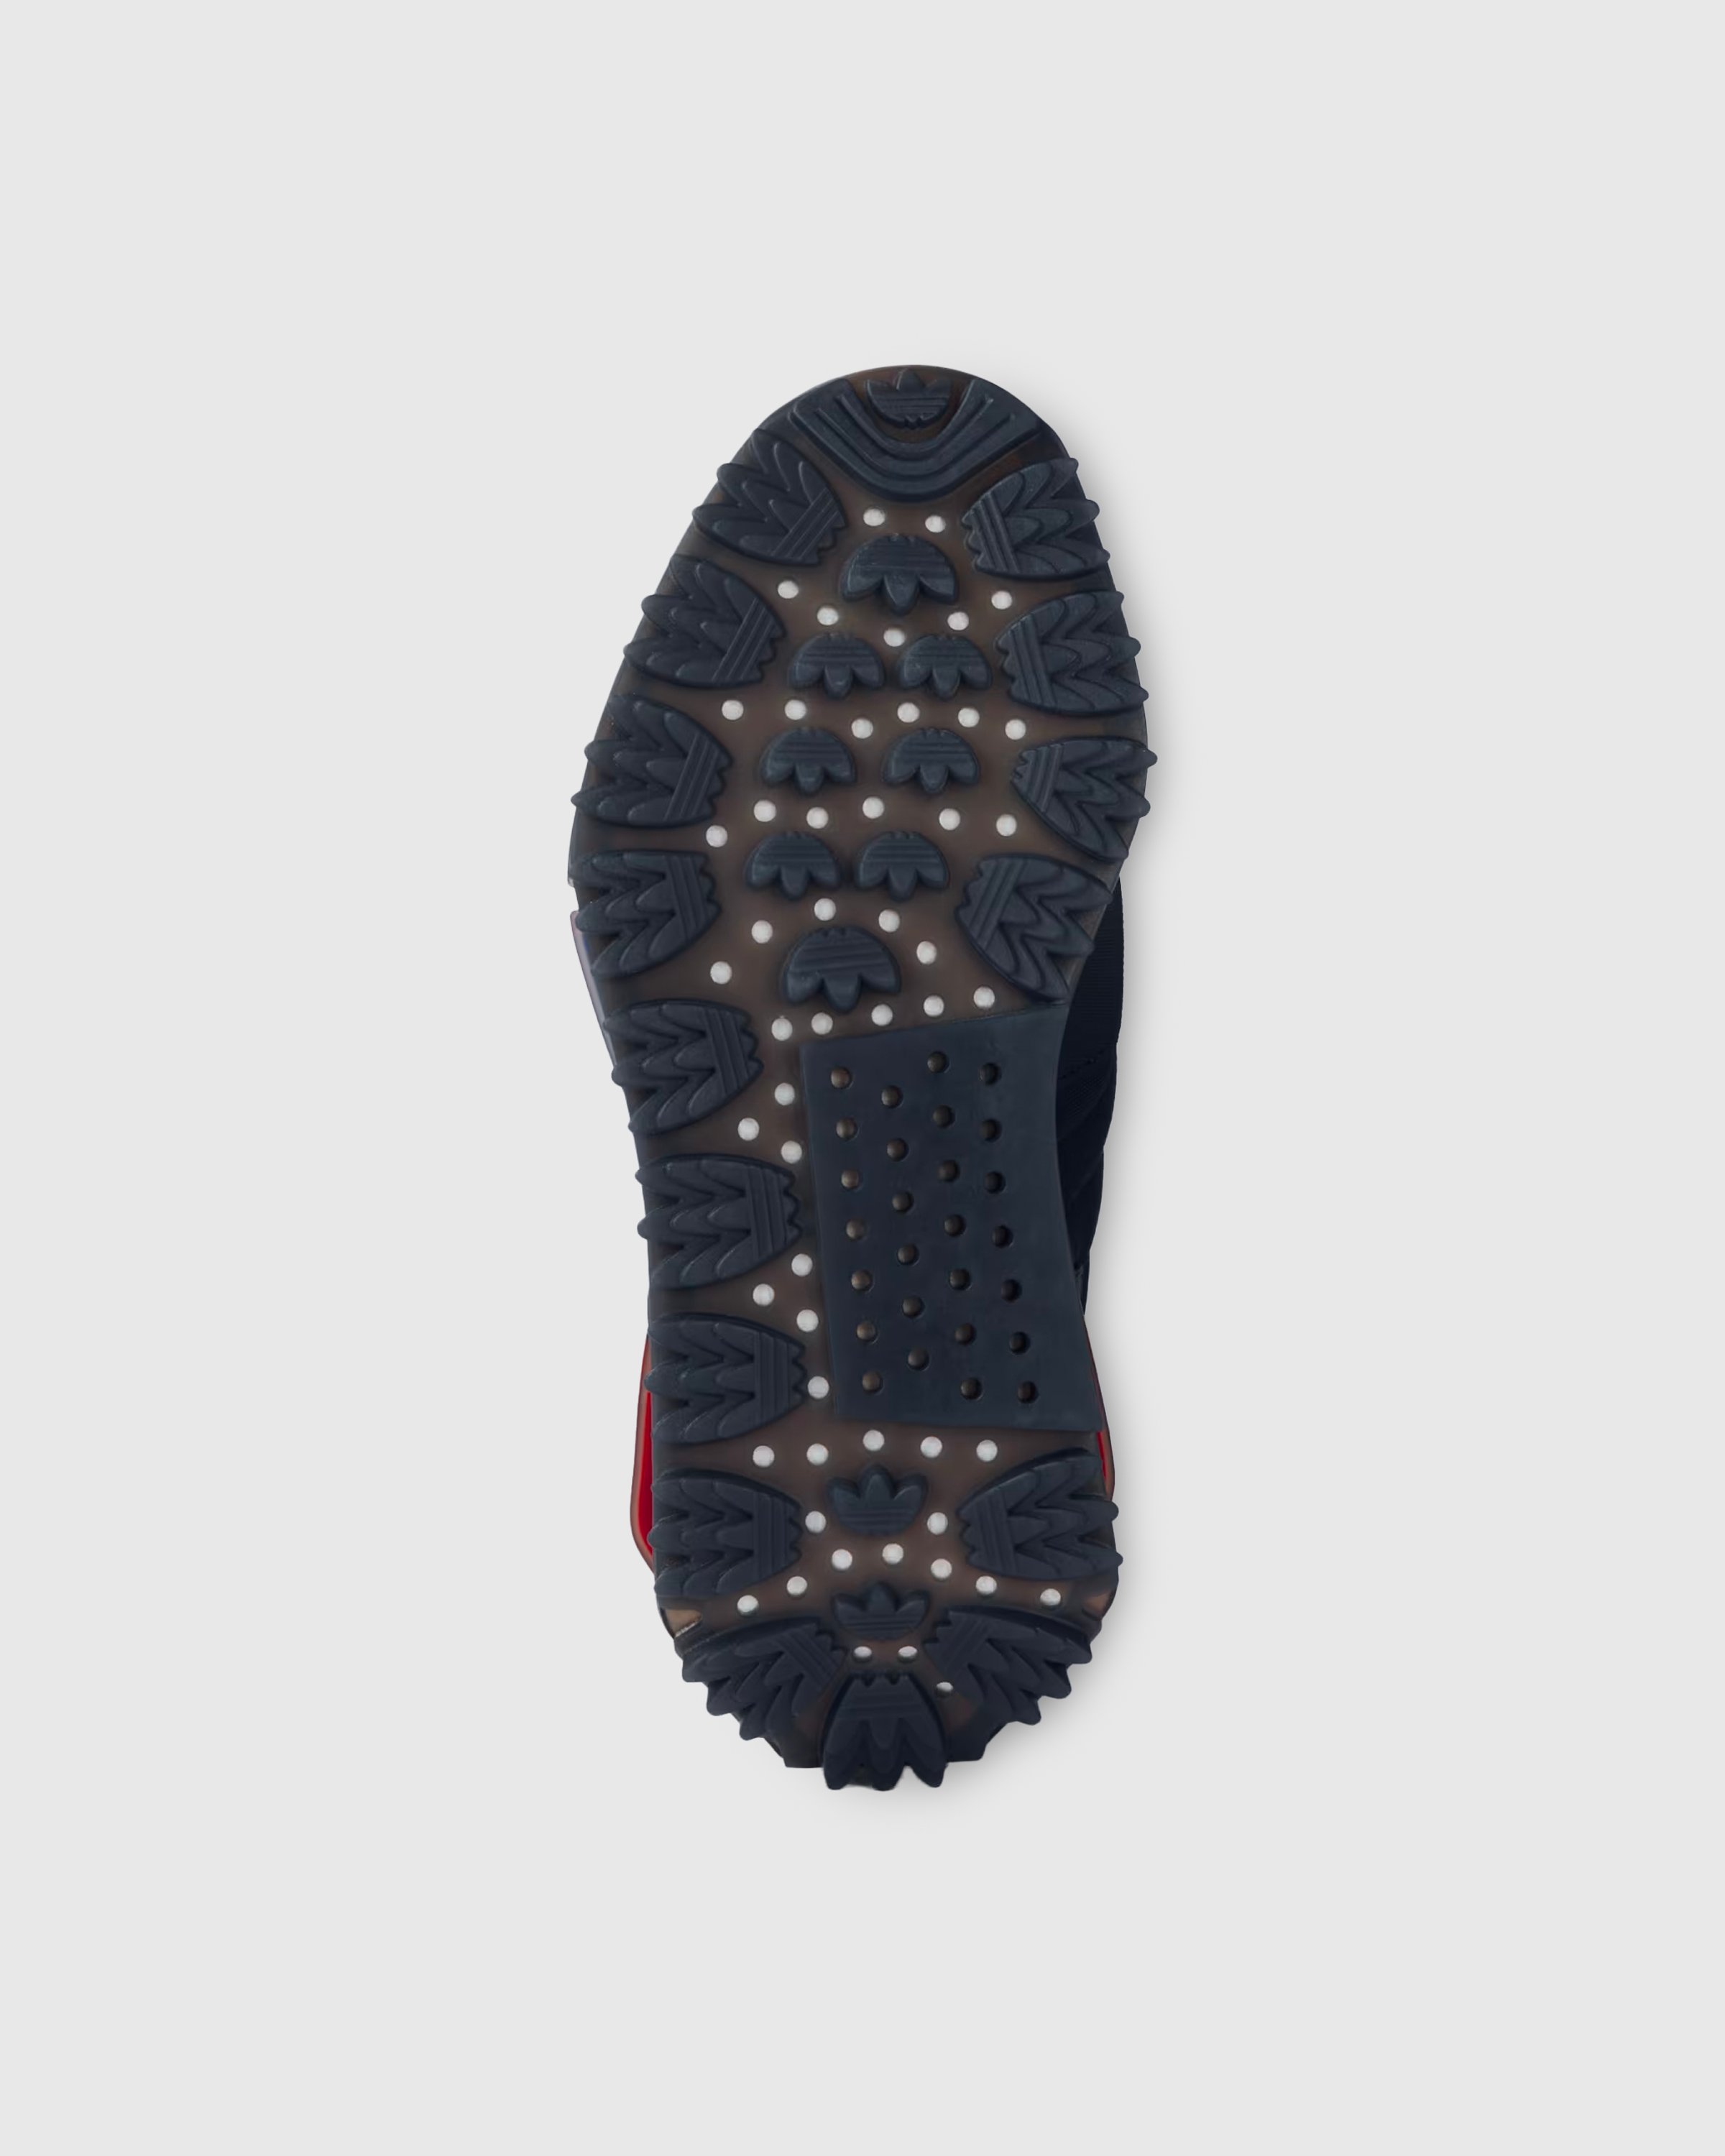 Moncler x adidas Originals - NMD Runner Shoes Core Black - Footwear - Black - Image 4